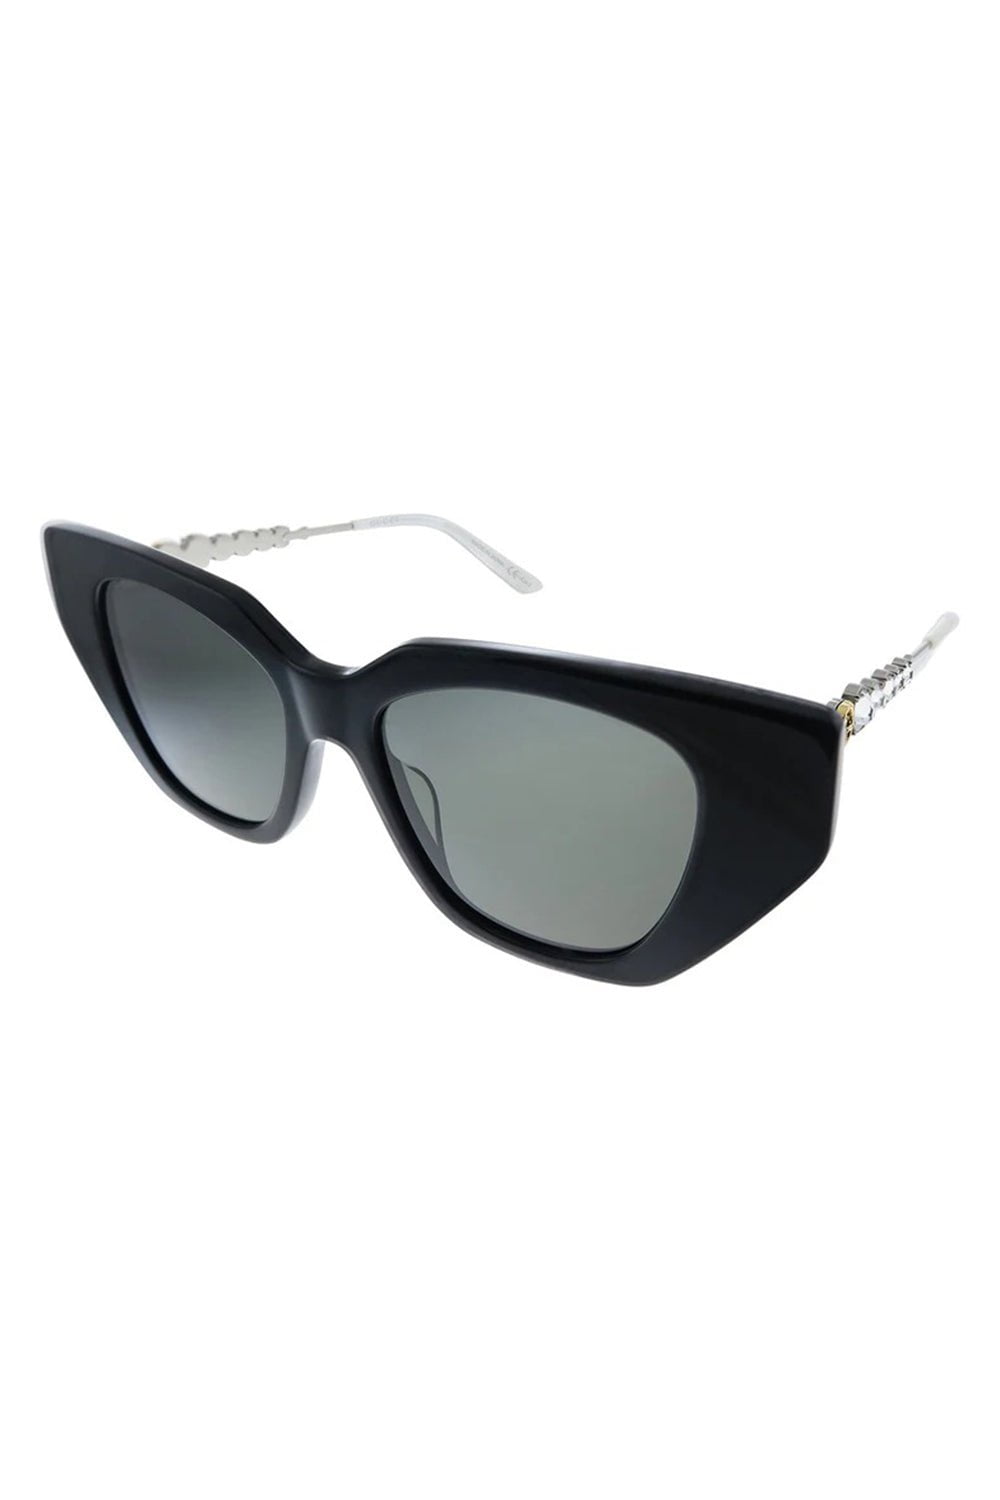 GUCCI-Cat Eye Sunglasses-BLACK/SILVER/GREY